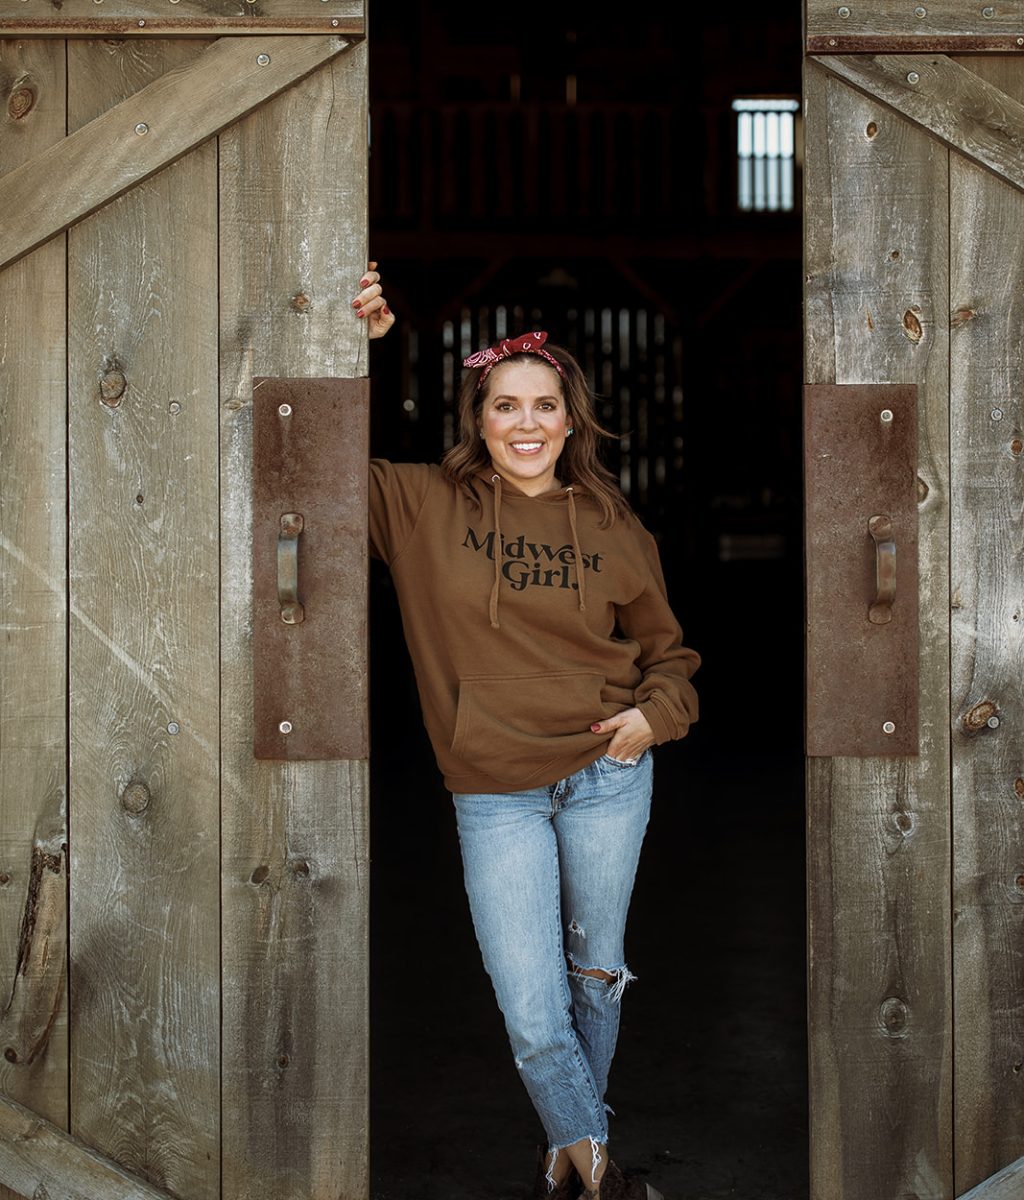 Annaliese Wegner - Modern Day Farm Chick - Midwest Girl sweatshirt in old barn door